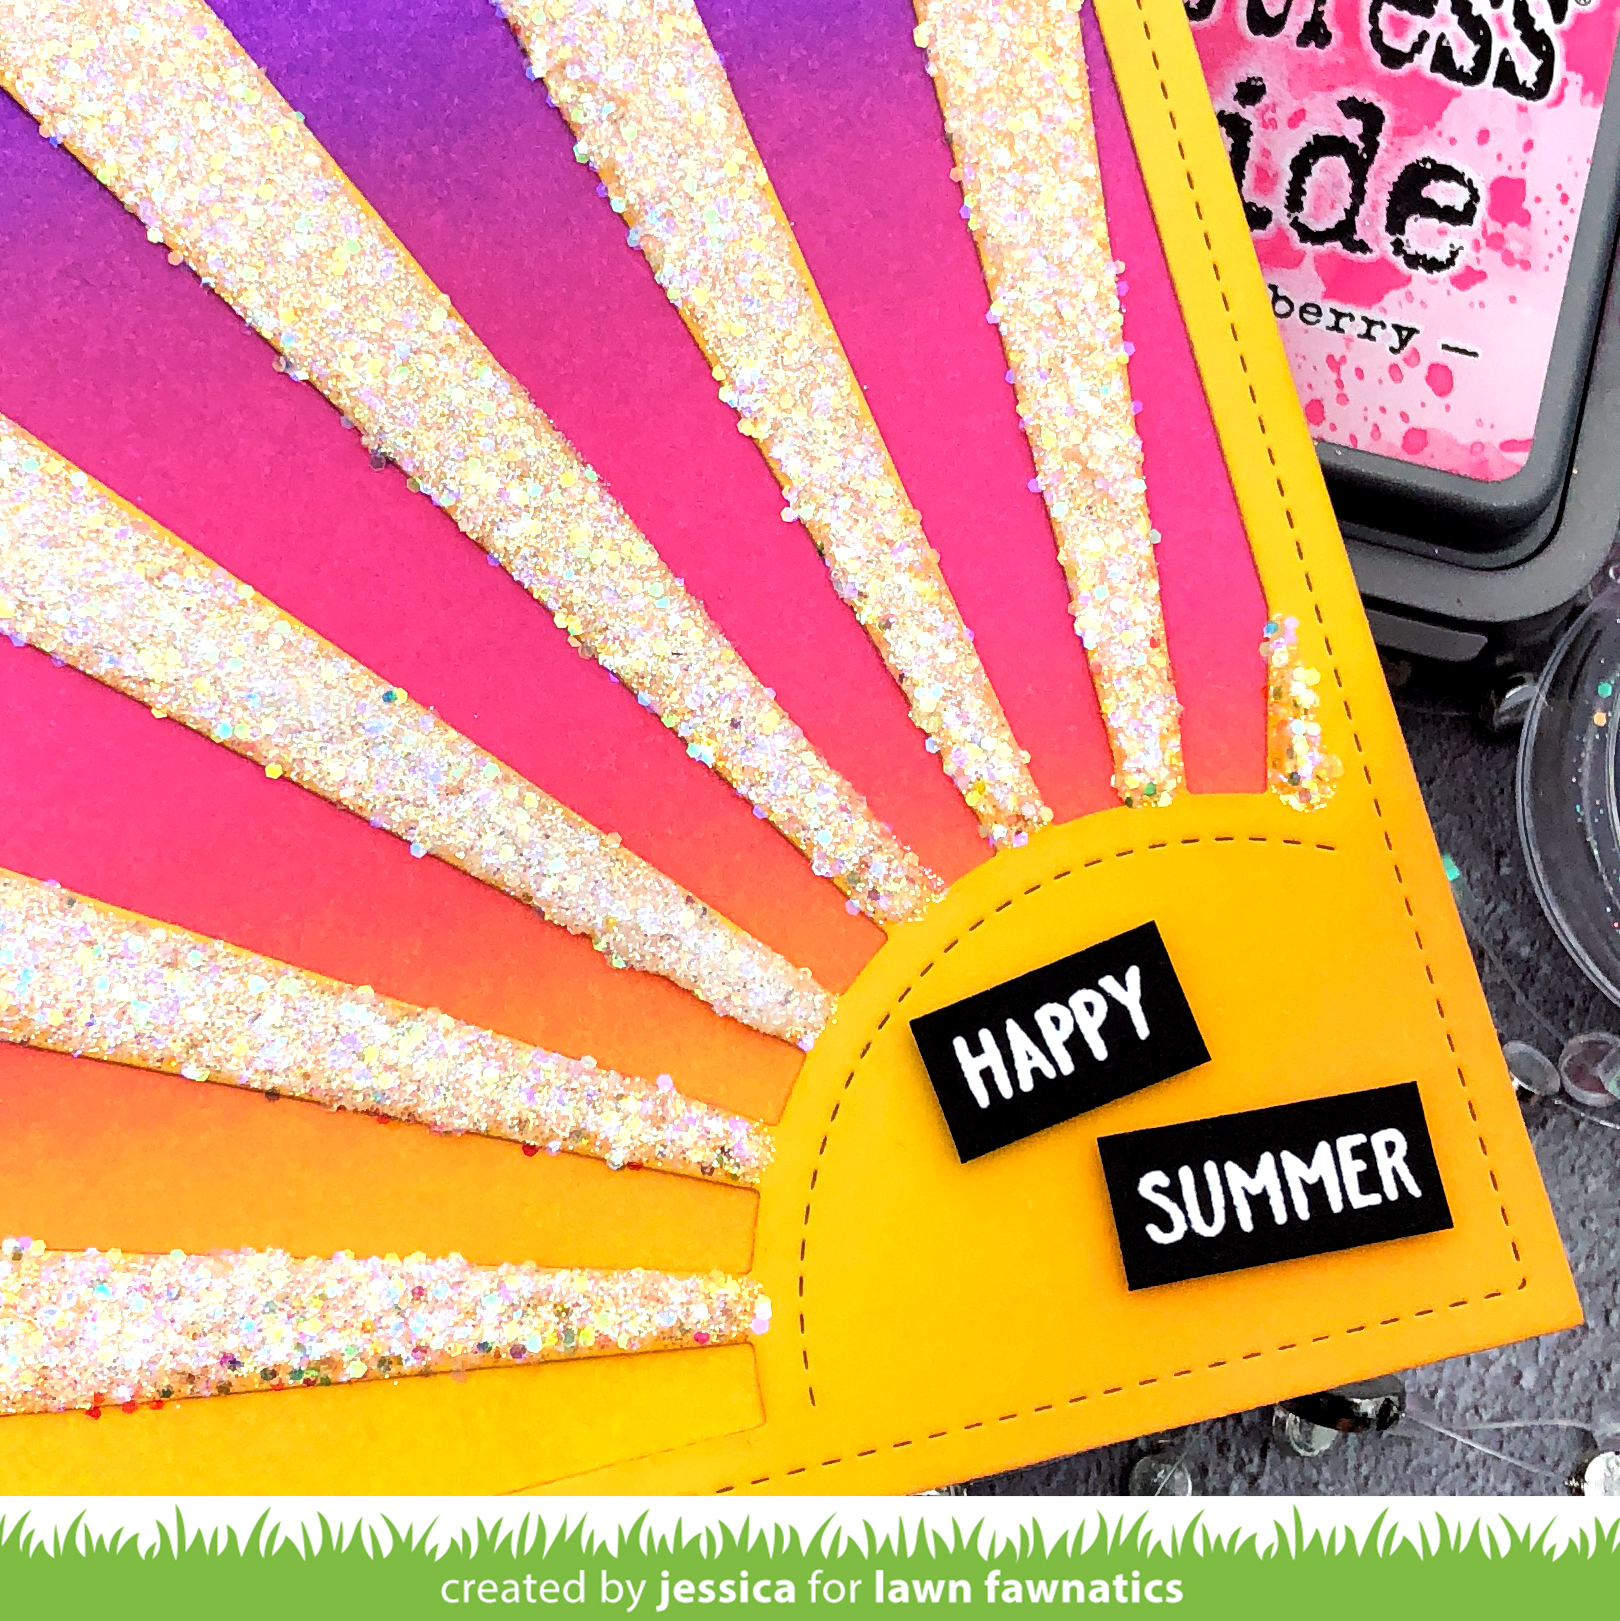 Happy Summer by Jessica Frost-Ballas for Lawn Fawnatics